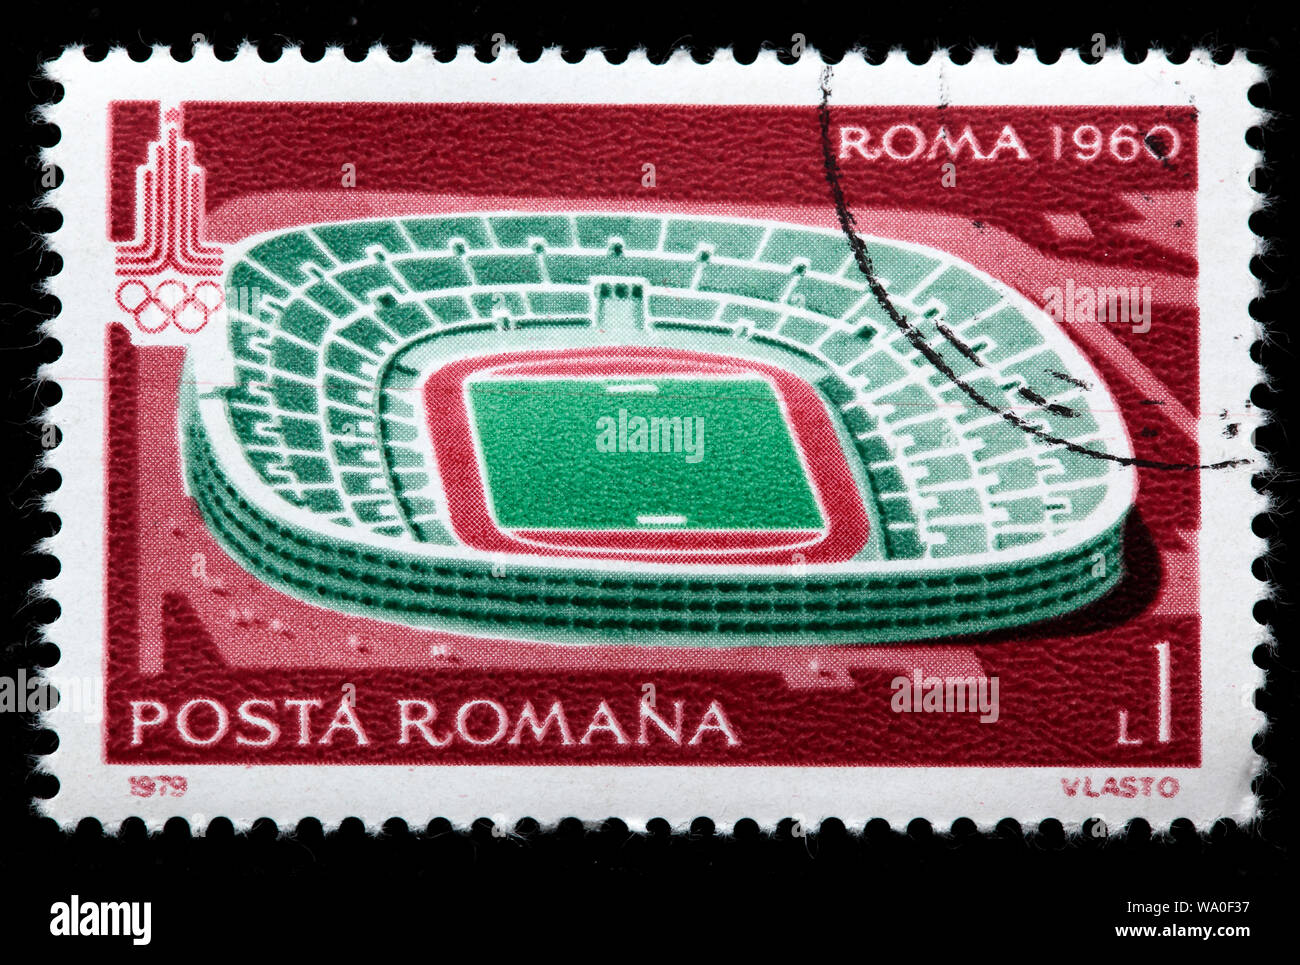 Stadium, Olympics, Rome (1960), postage stamp, Romania, 1979 Stock Photo